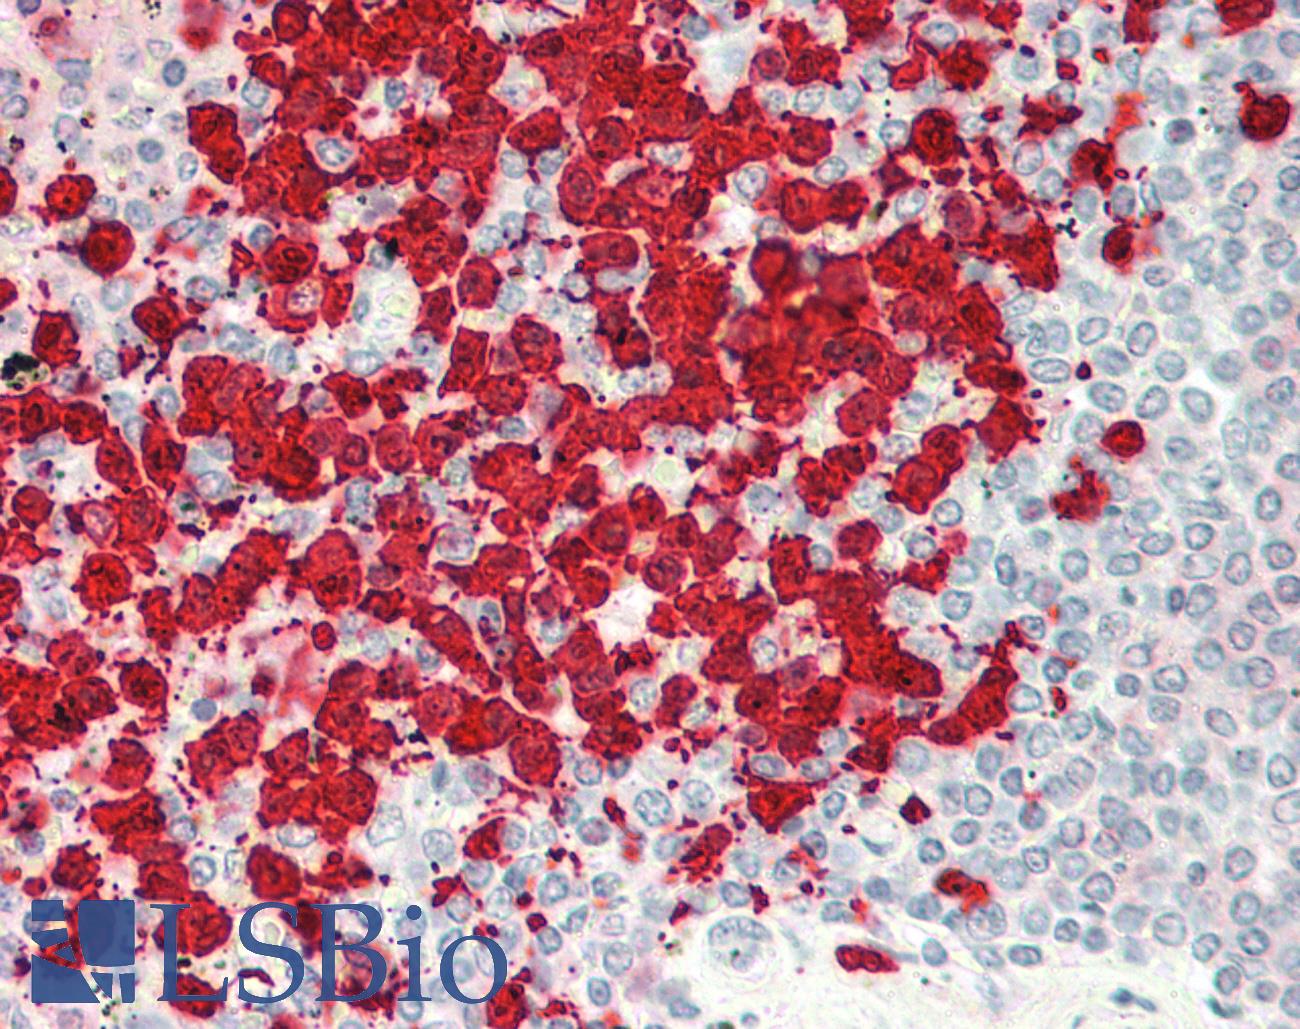 PECAM-1 / CD31 Antibody - Human Spleen: Formalin-Fixed, Paraffin-Embedded (FFPE)